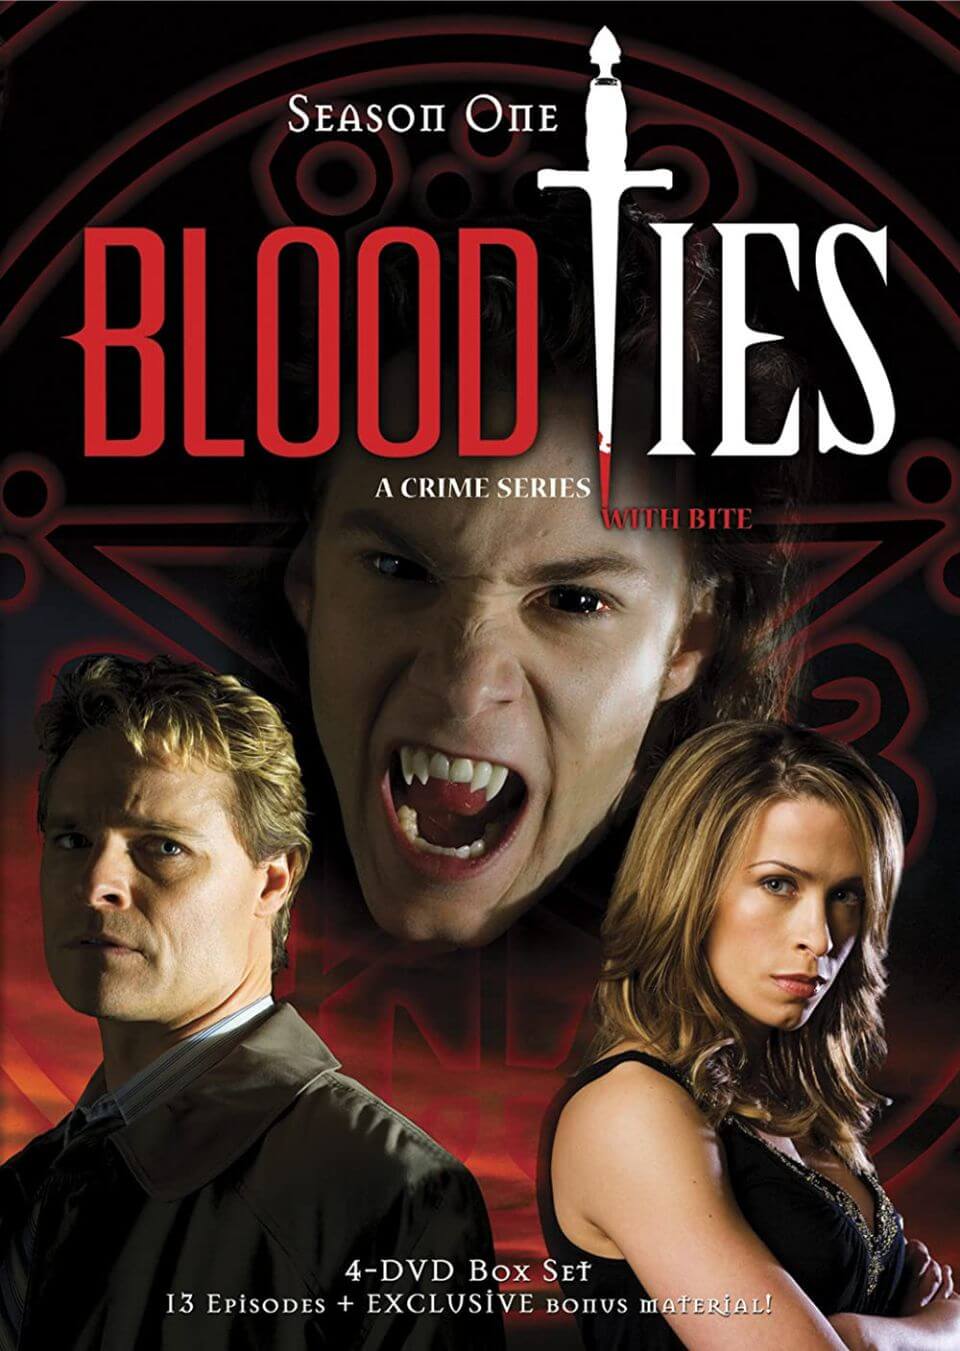 Blood Ties DVD cover